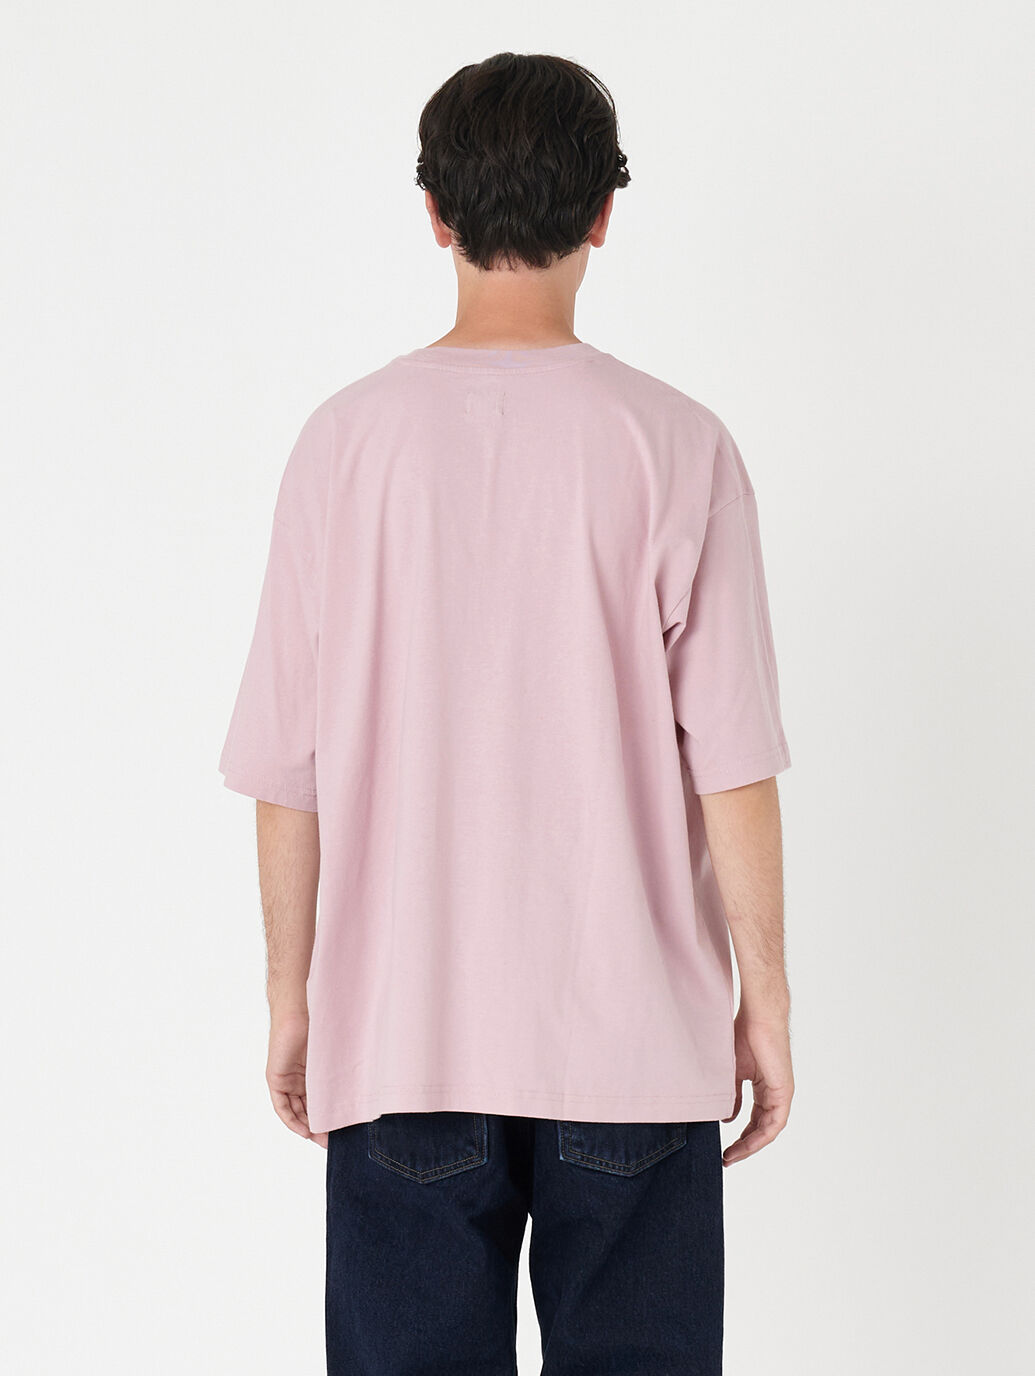 FINE BOYS 11月号掲載】LEVI'S® SKATE グラフィック Tシャツ ピンク